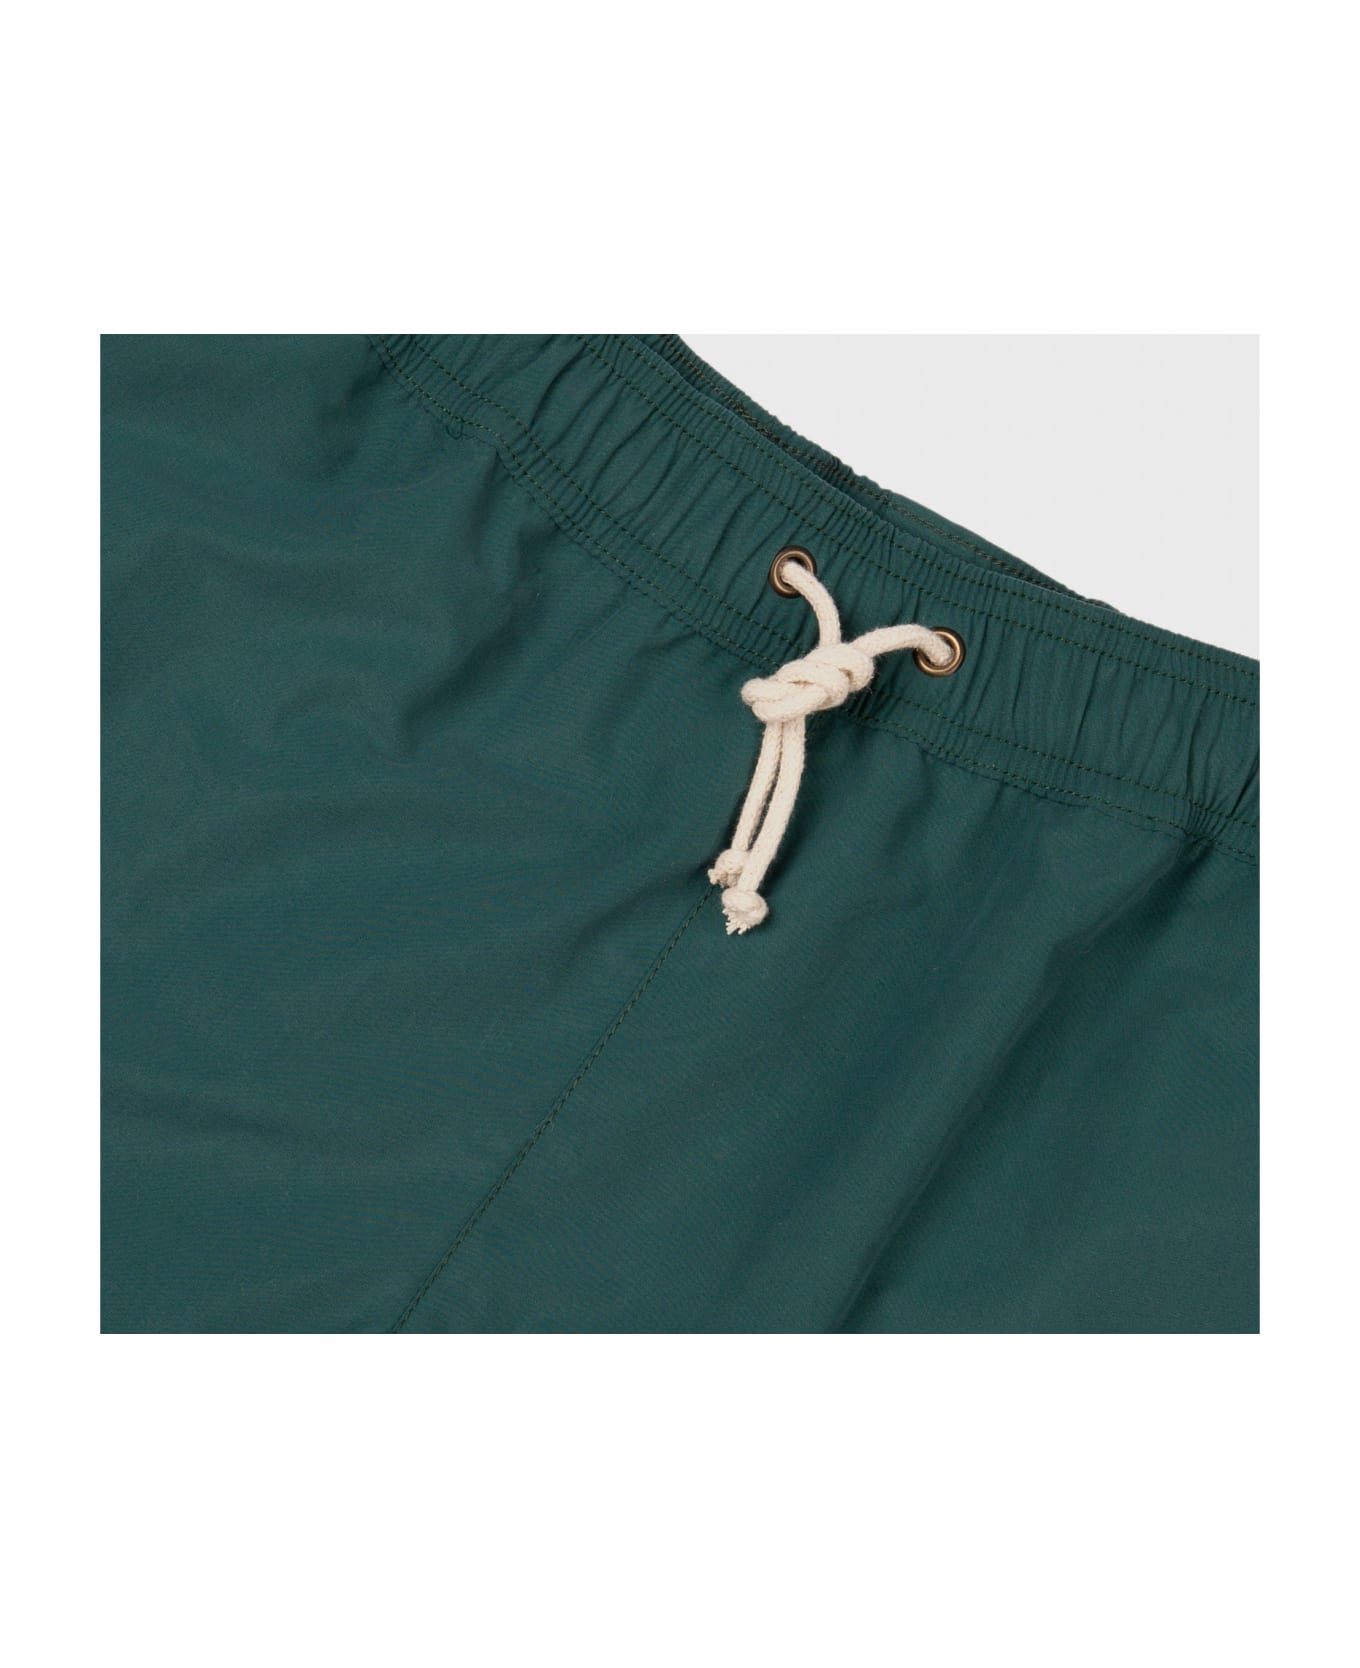 Ripa Ripa Verde Pino new Shorts - Green